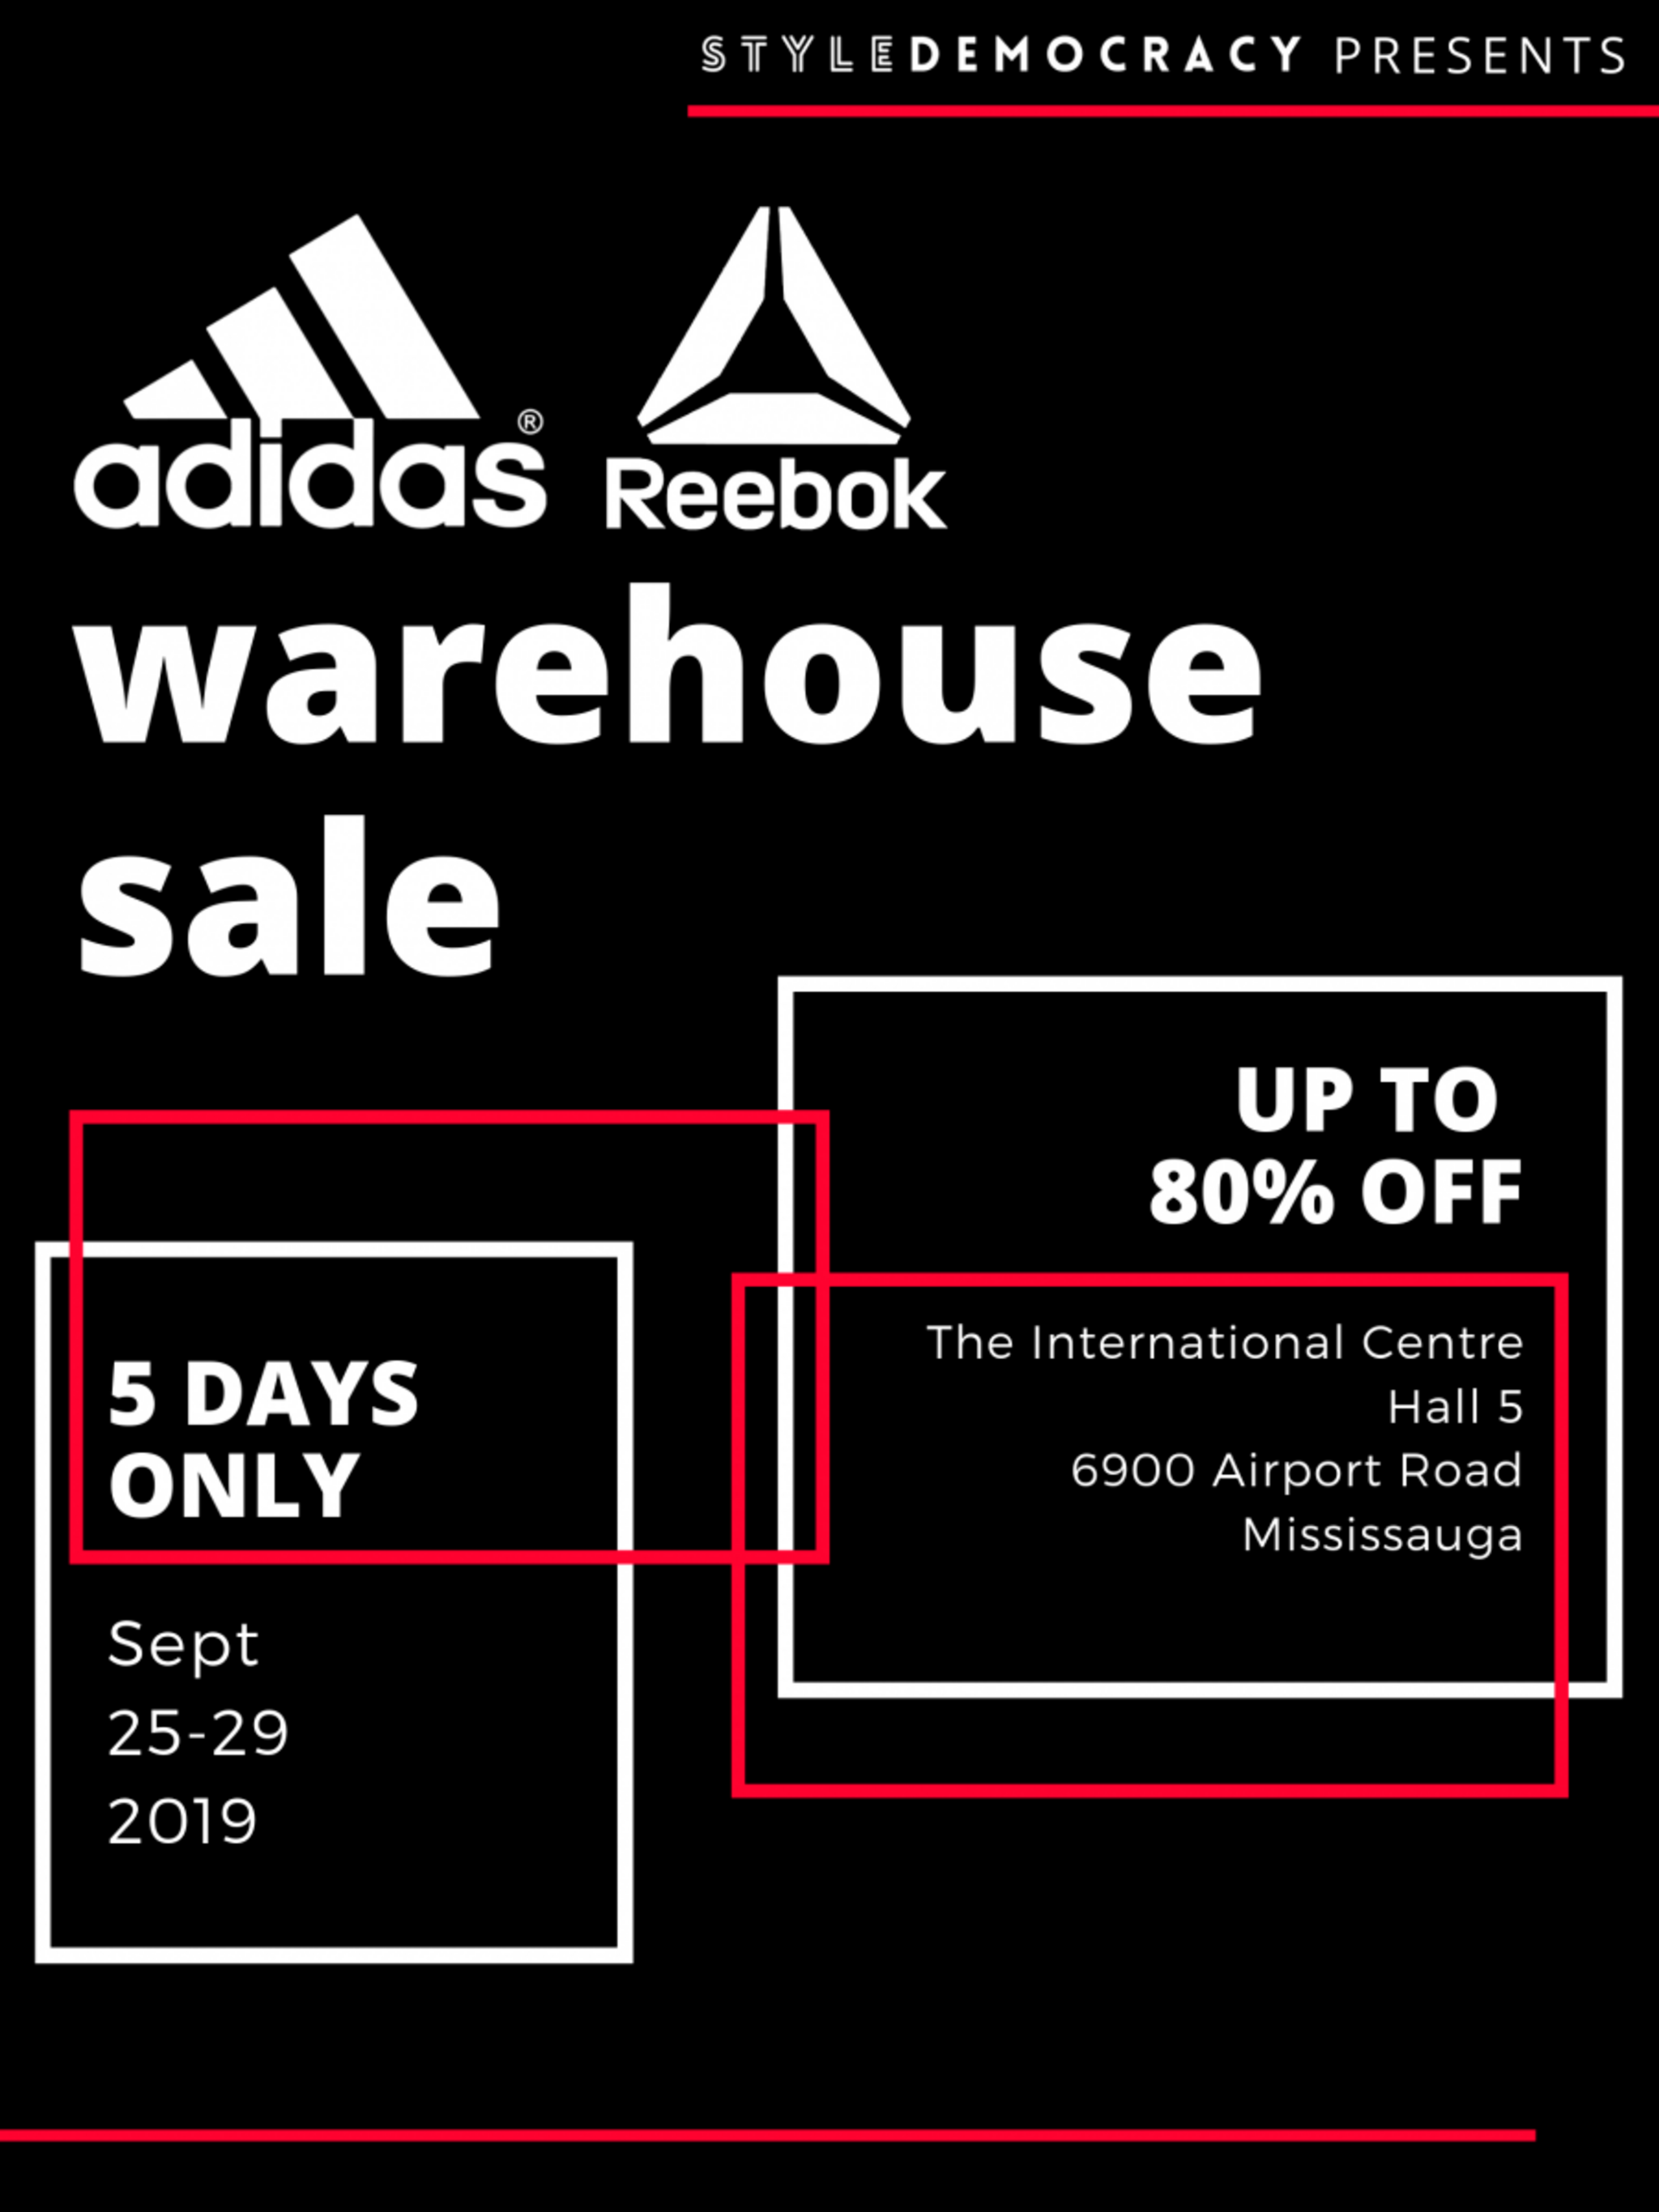 adidas & Reebok Warehouse Sale